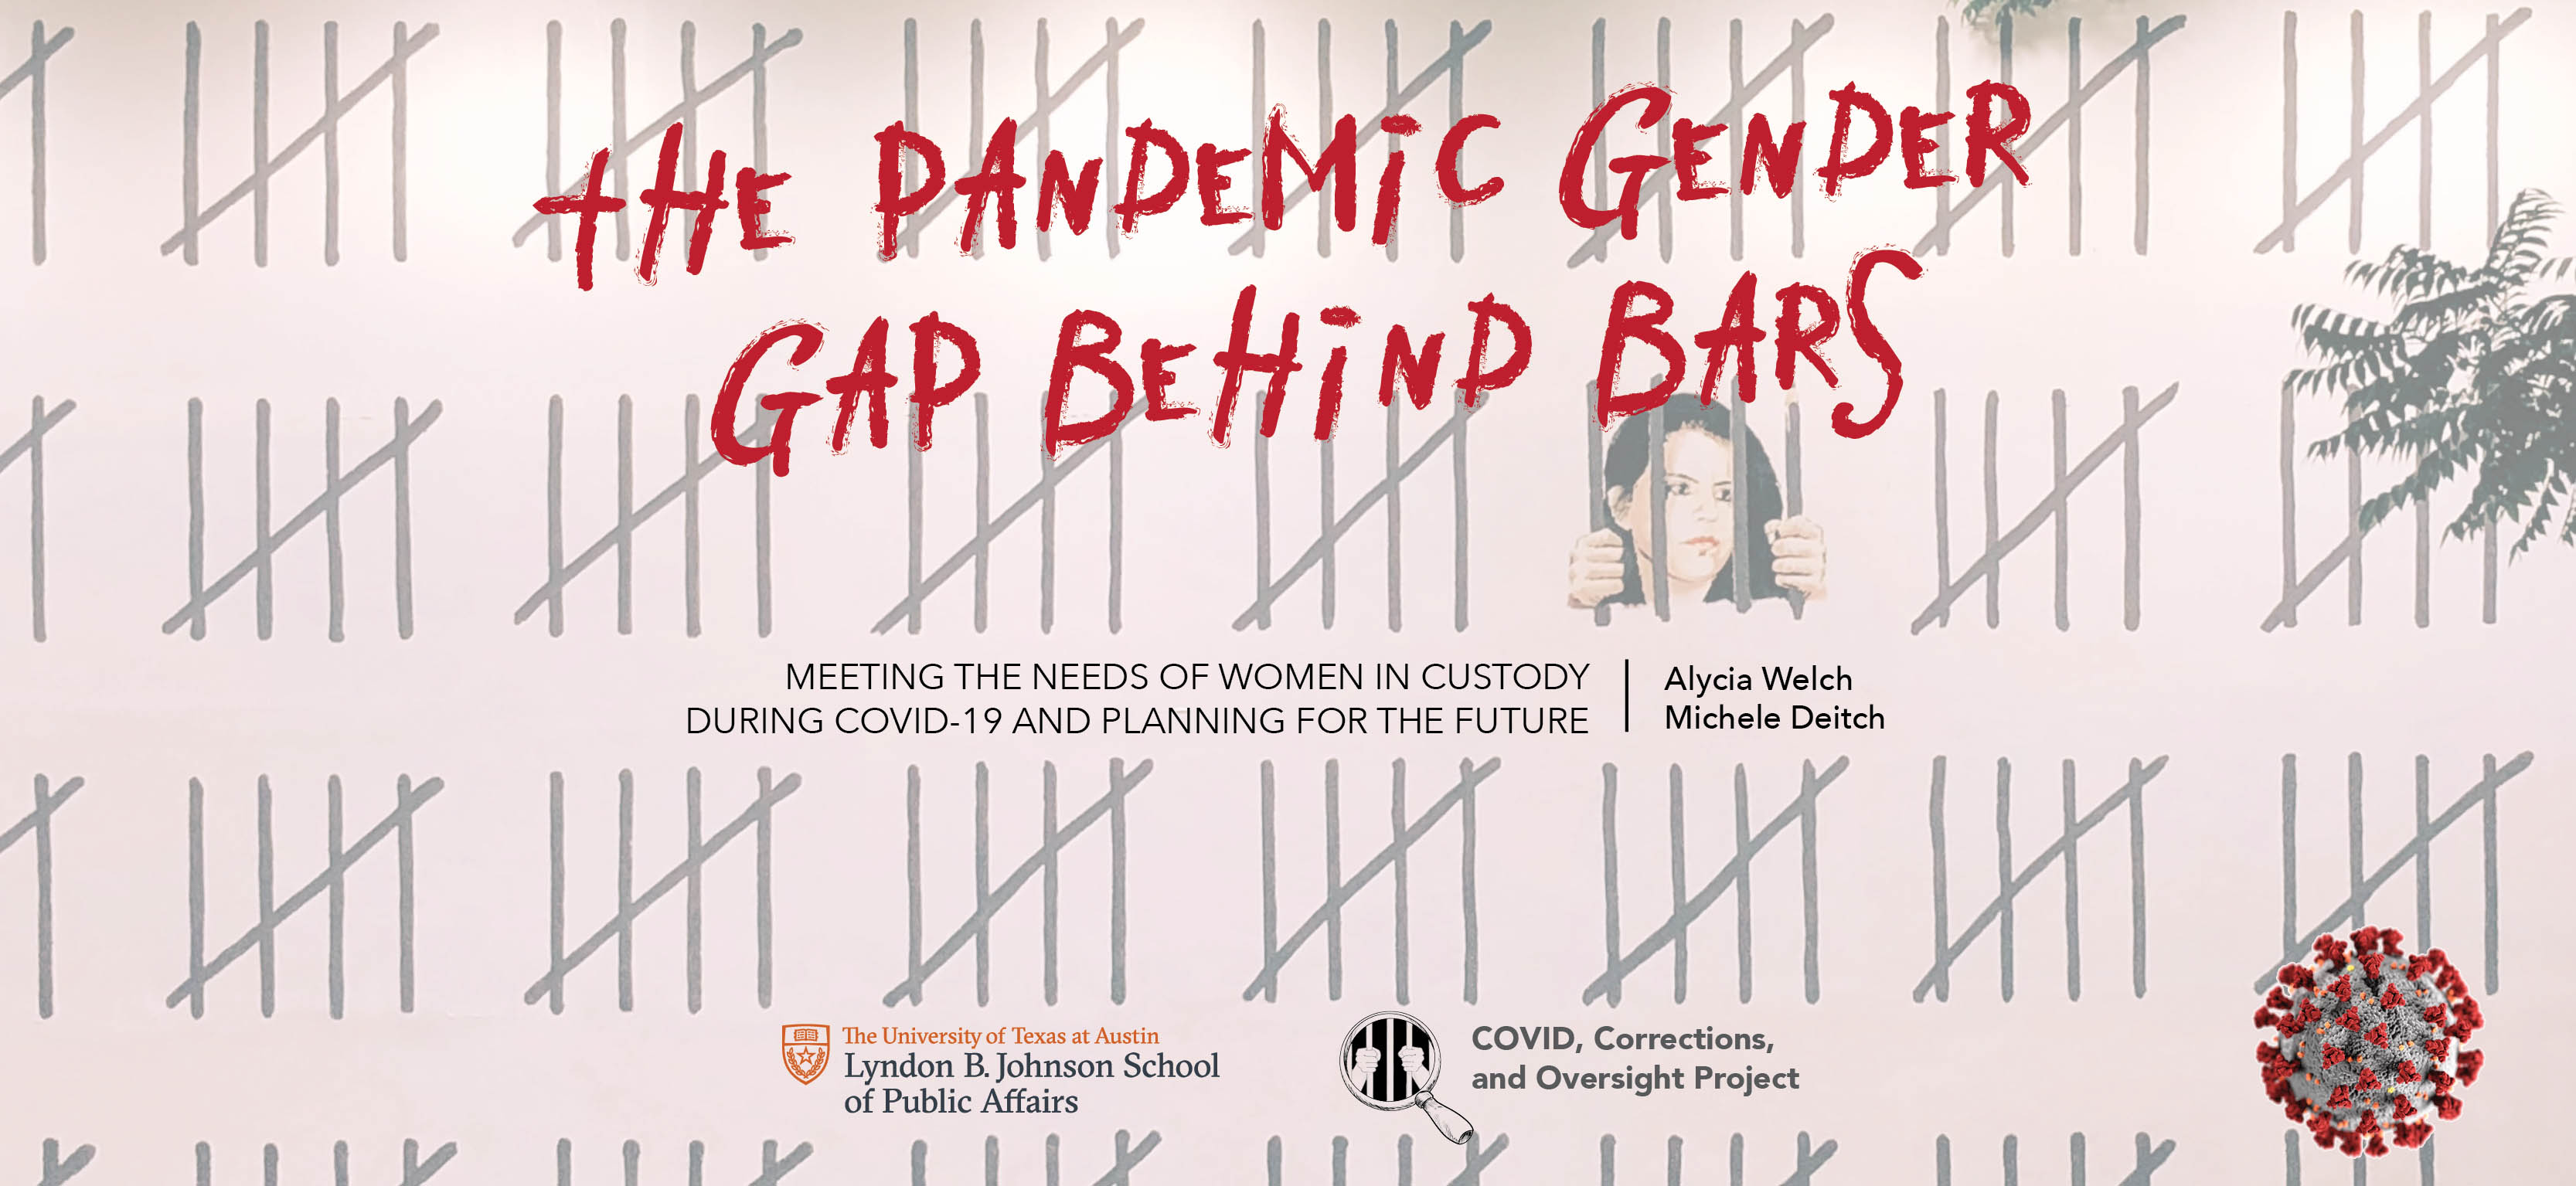 The Pandemic Gender Gap Behind Bars by Alycia Welch, Michele Deitch